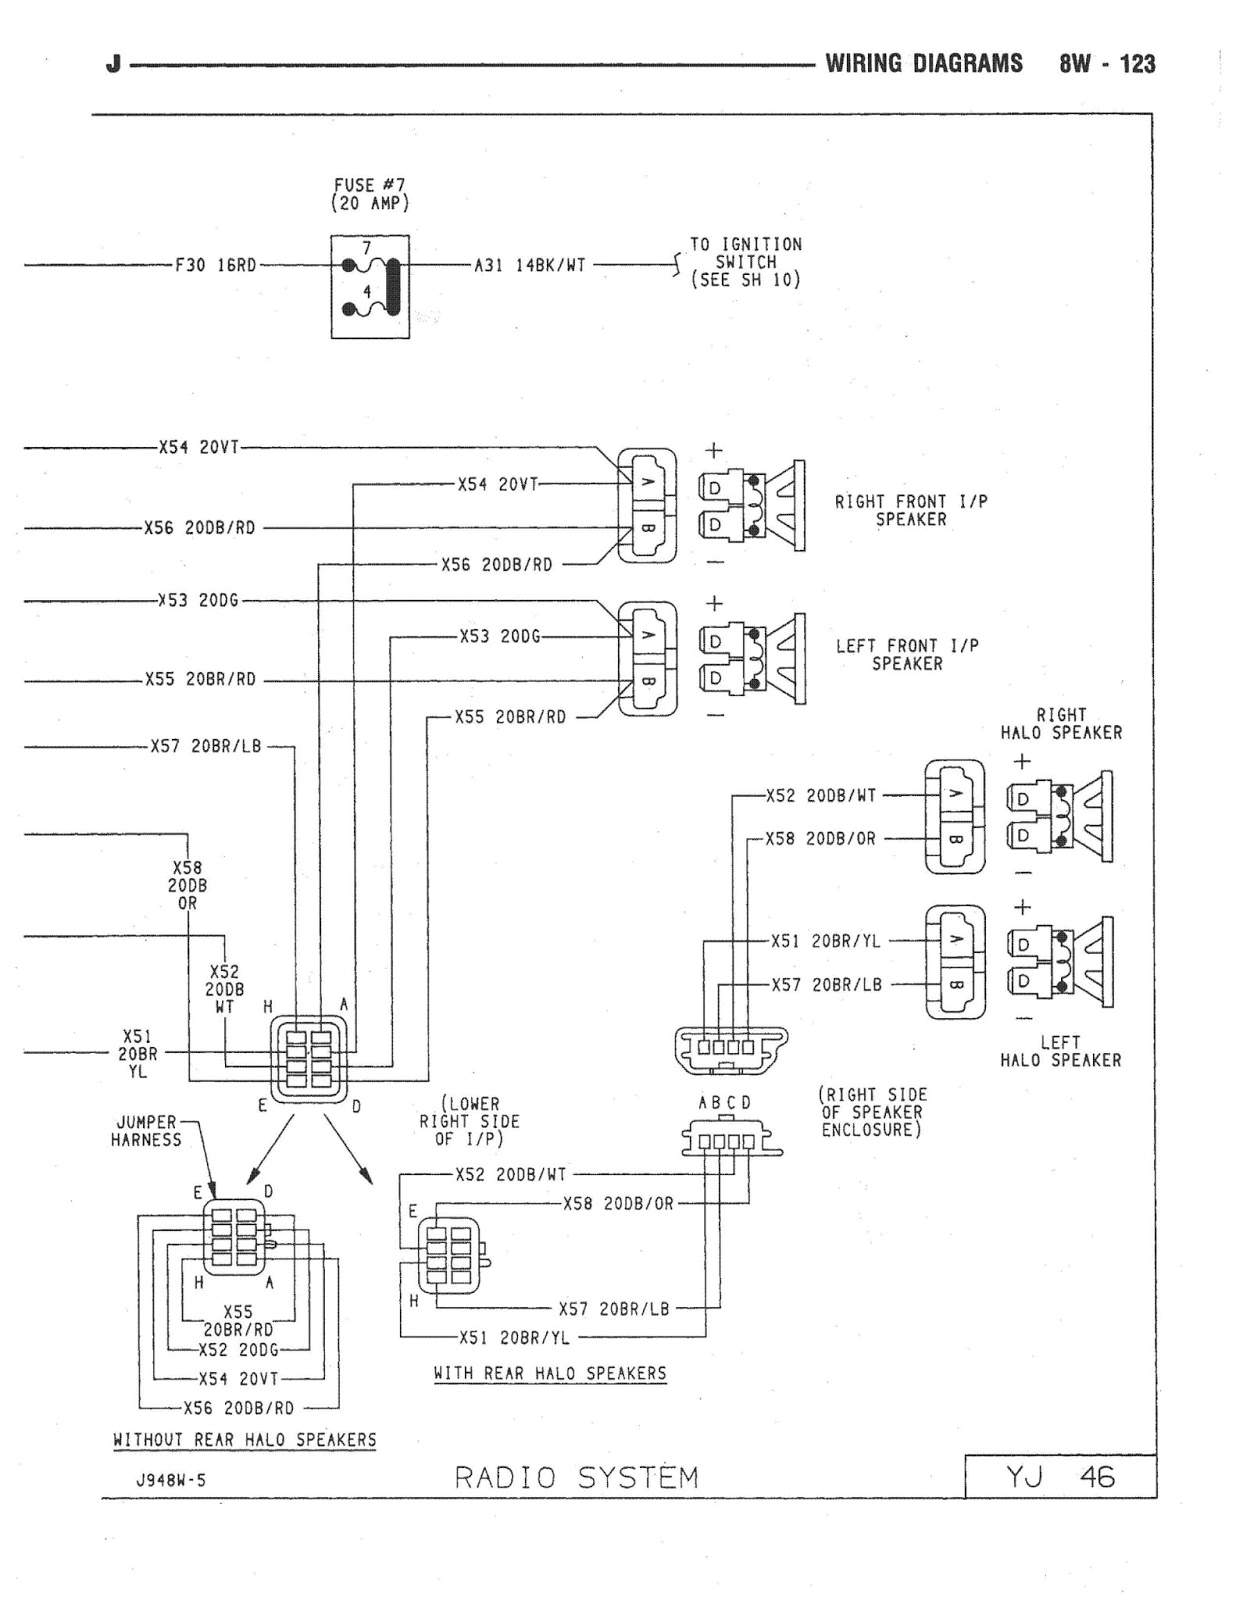 jeep wrangler wiring diagram sewing patterns engine tj uk scaled image jpg